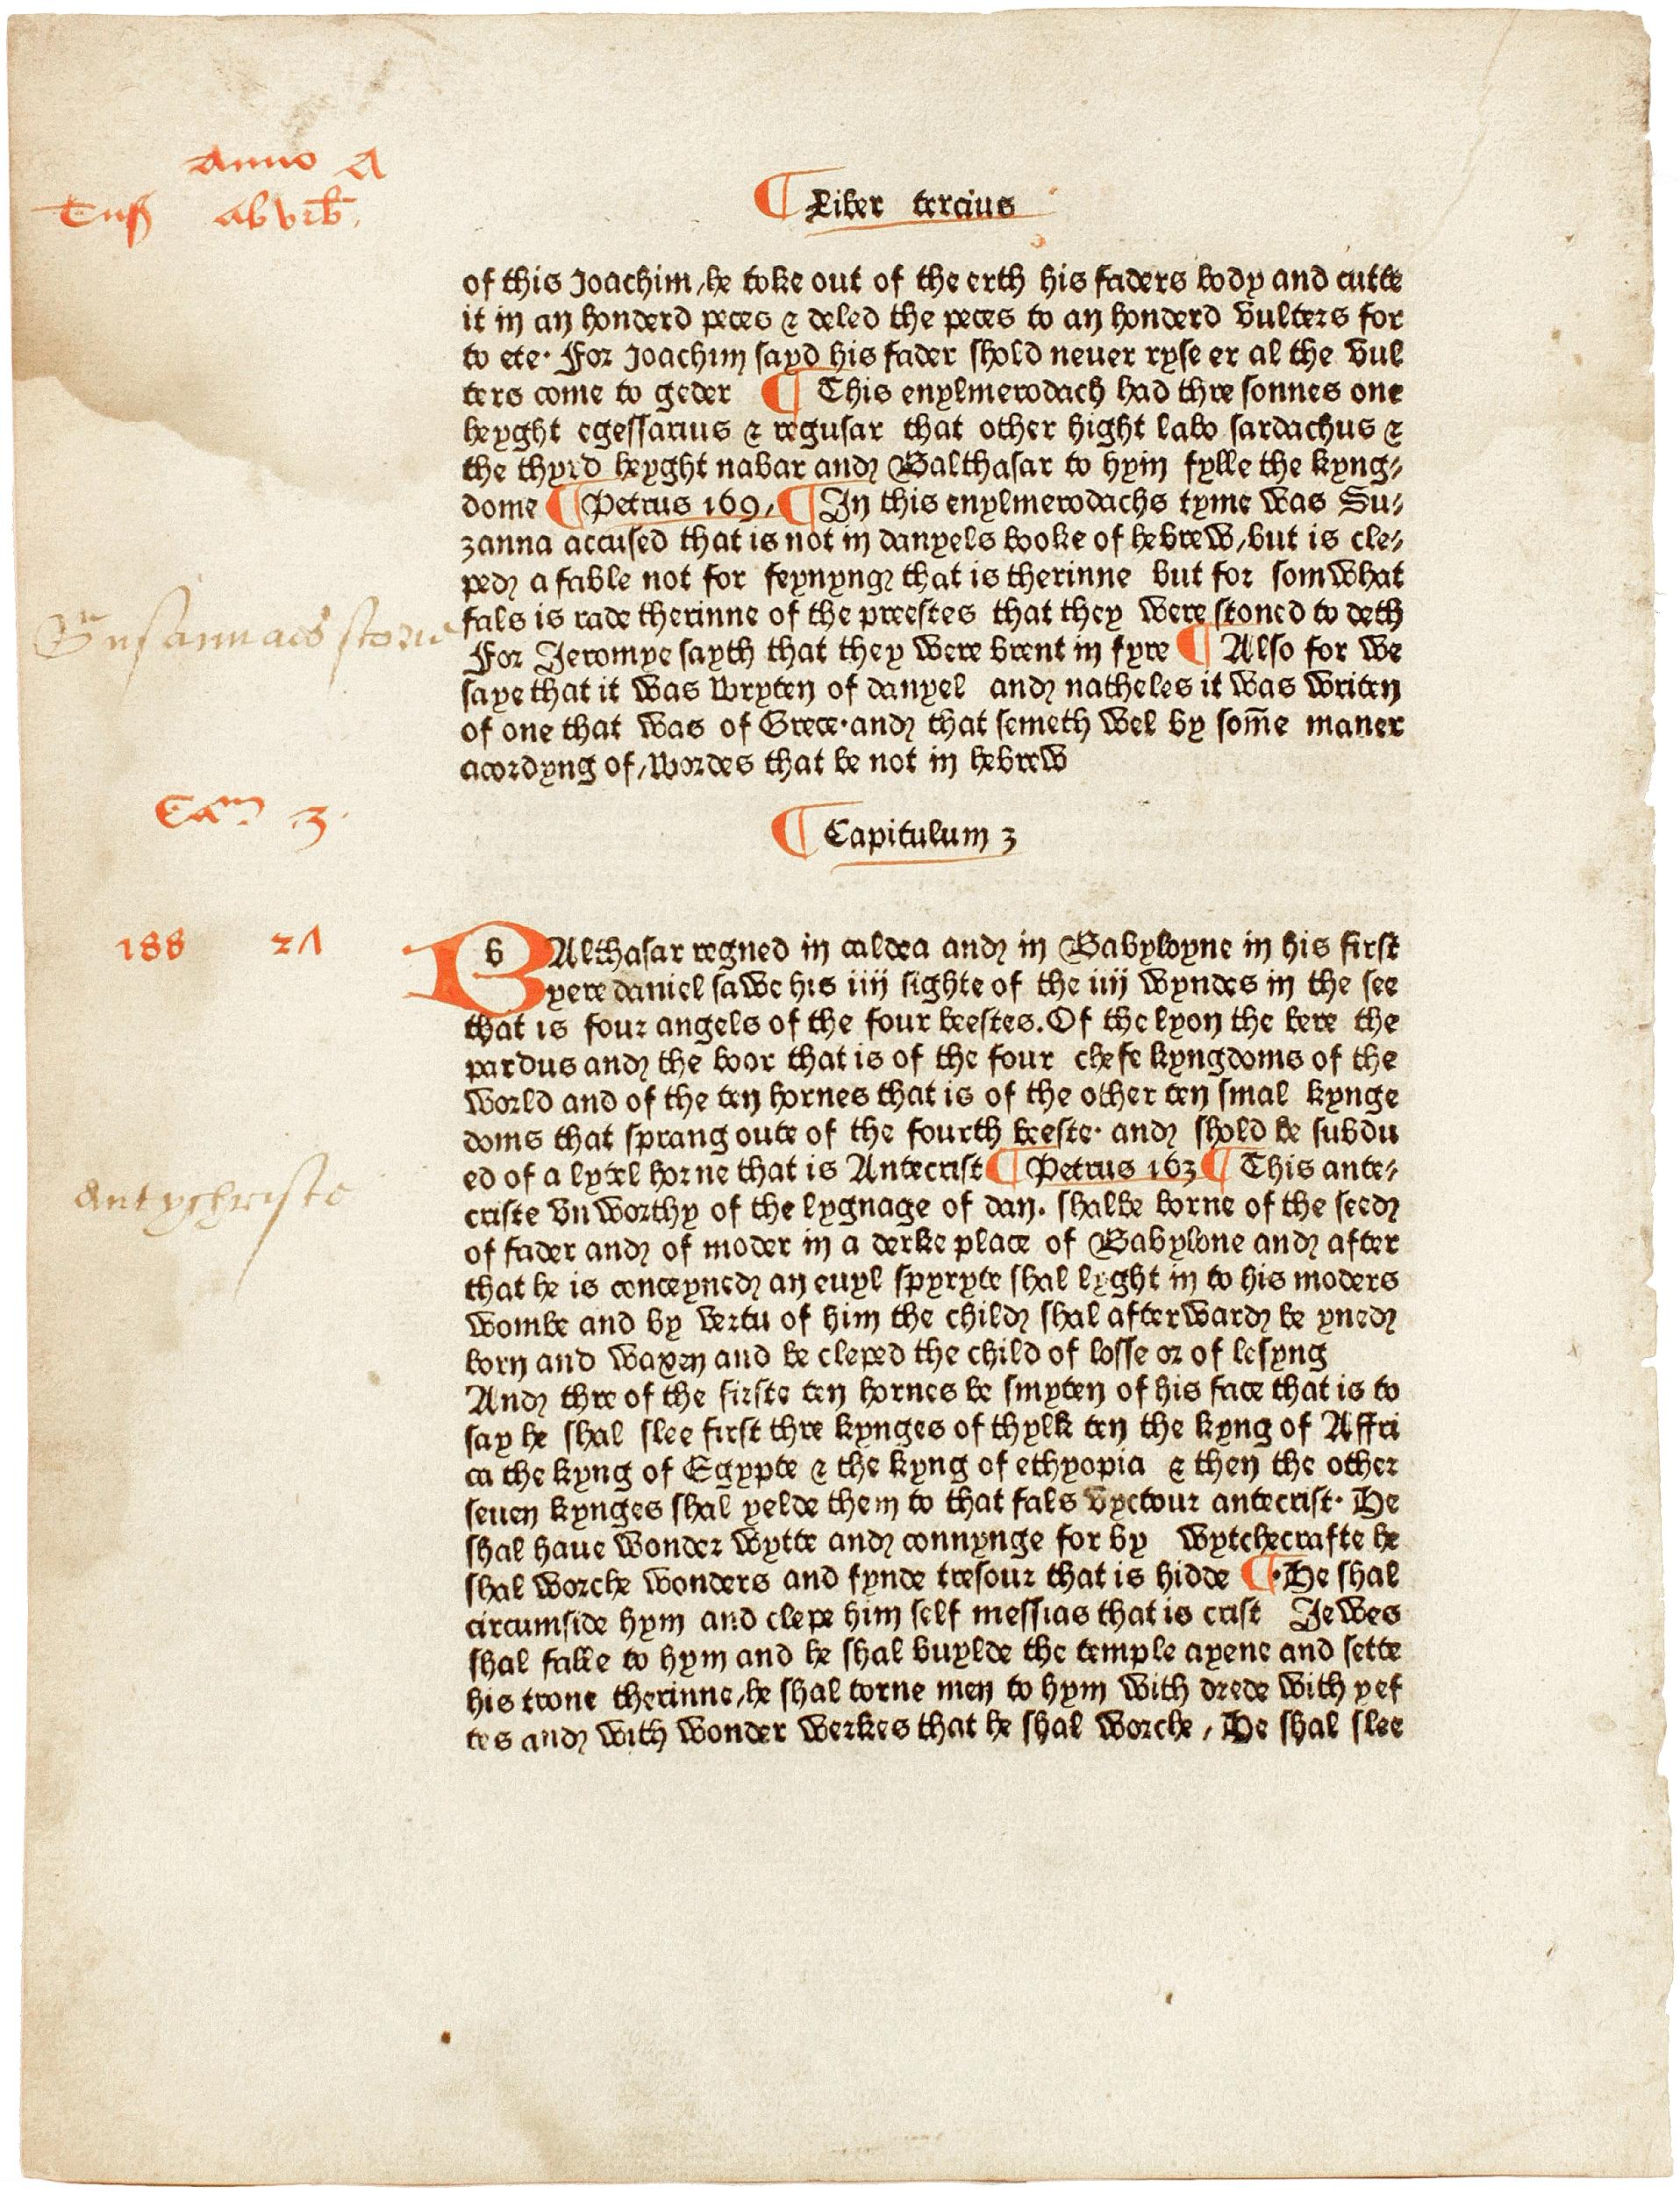 Author: Caxton, William - Higden, Ranulf (Ranulphus). 

Title: Polycronicon. (Polychronicon).

Publisher: [Westminster]: William Caxton, 1482.

Description: A single folio leaf, 27.6 cm x 20.9 cm, from Liber Tertius, 40 lines and headline,